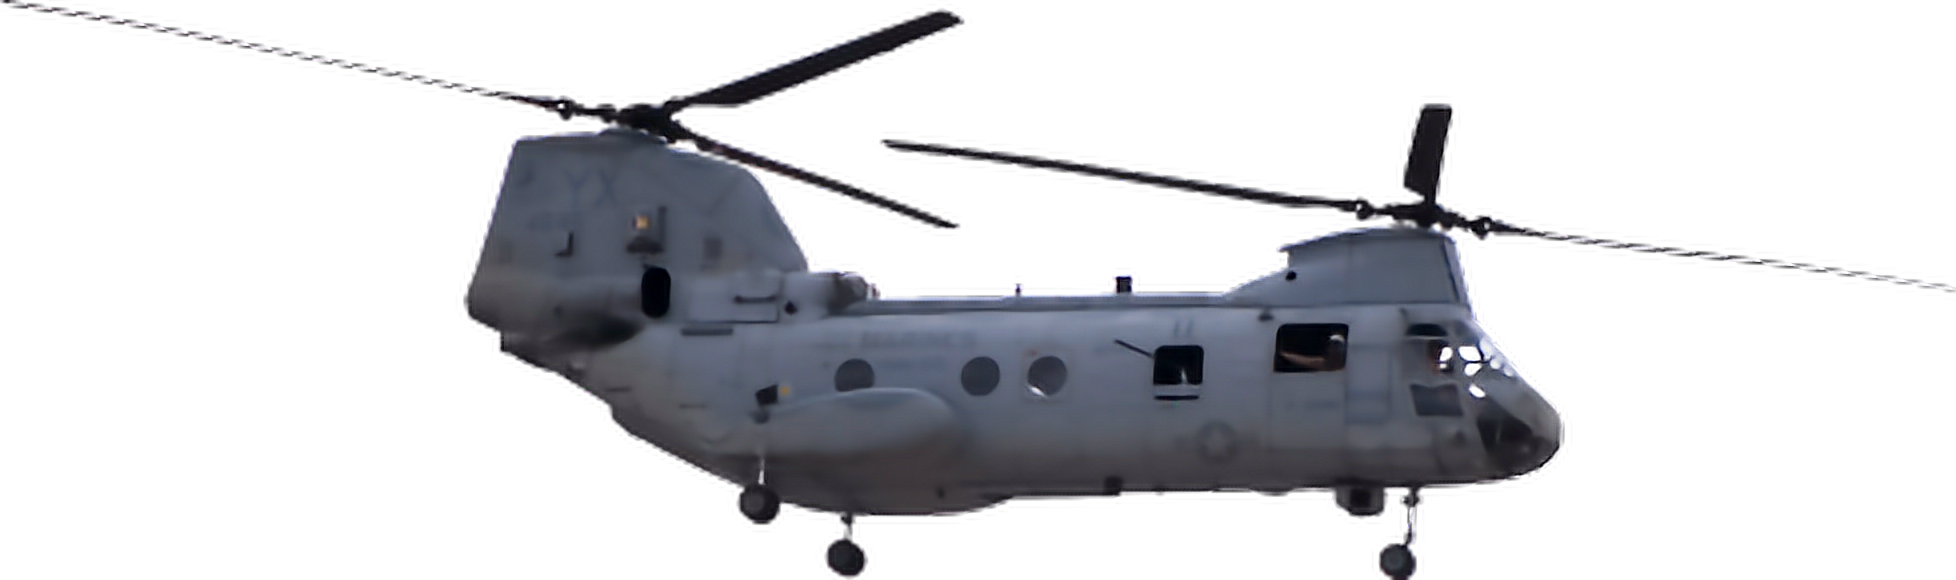 Army Helicopter Imagen PNG de fondo